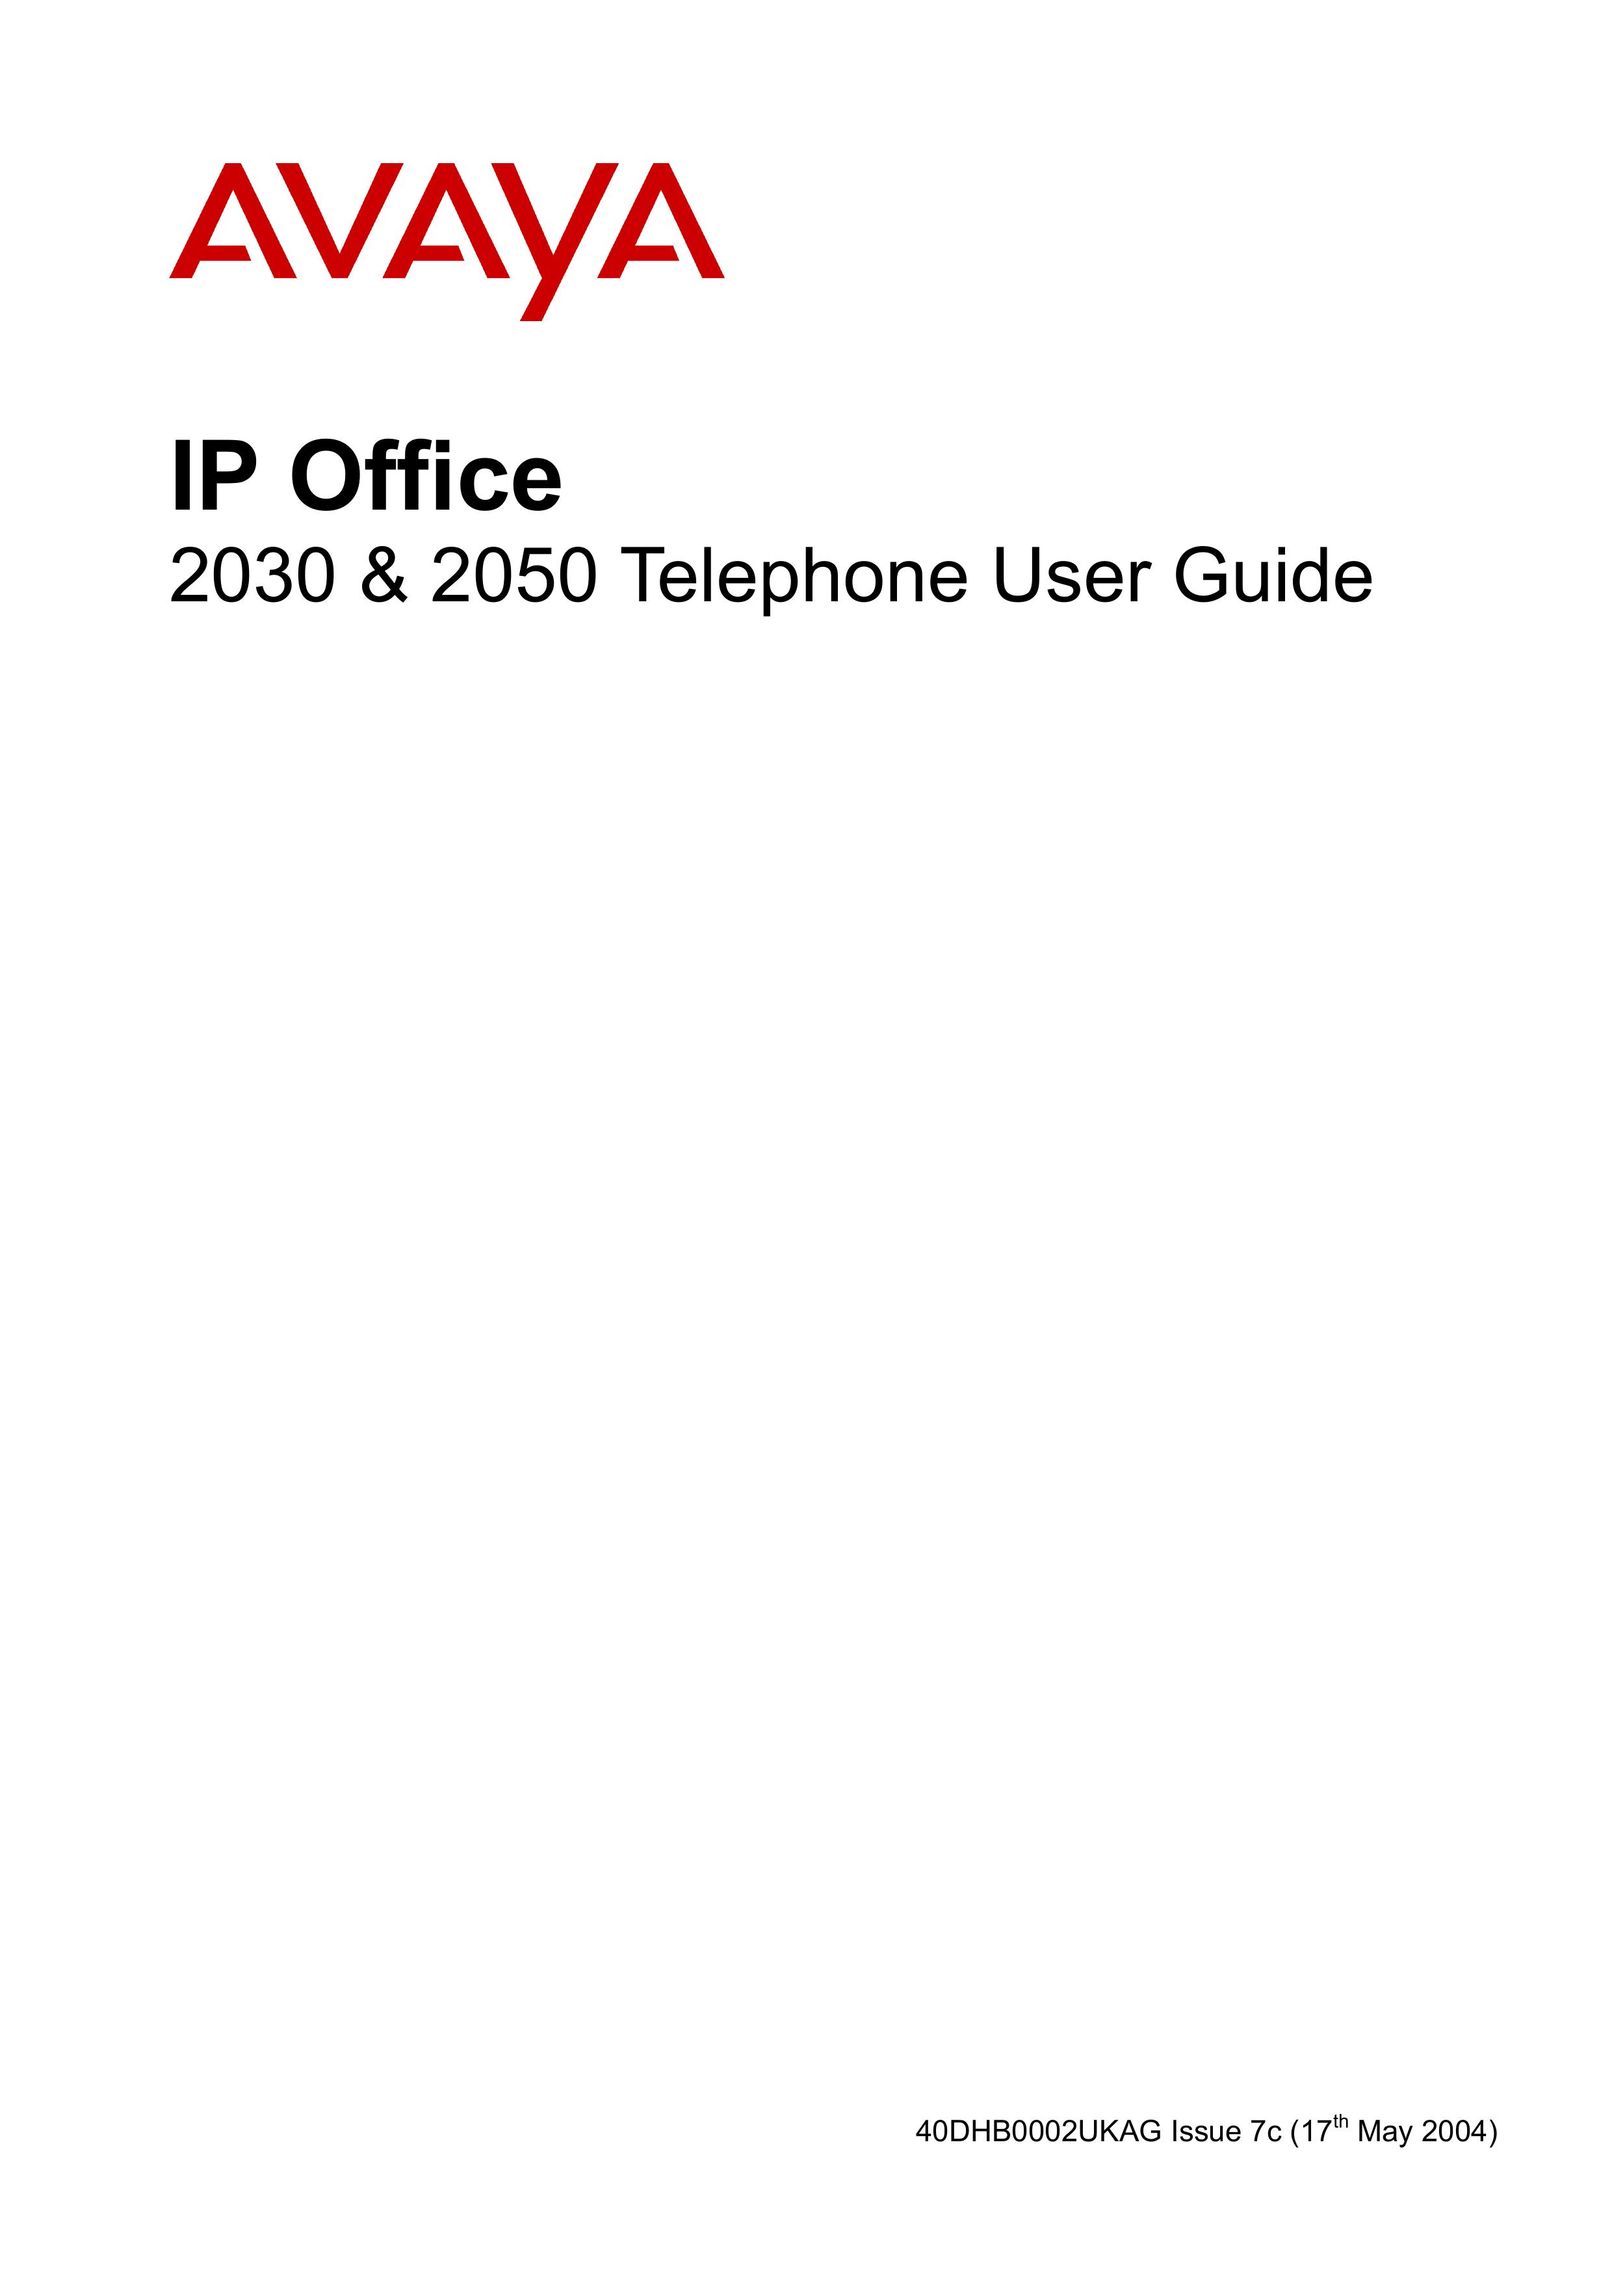 Avaya 2030 Telephone User Manual